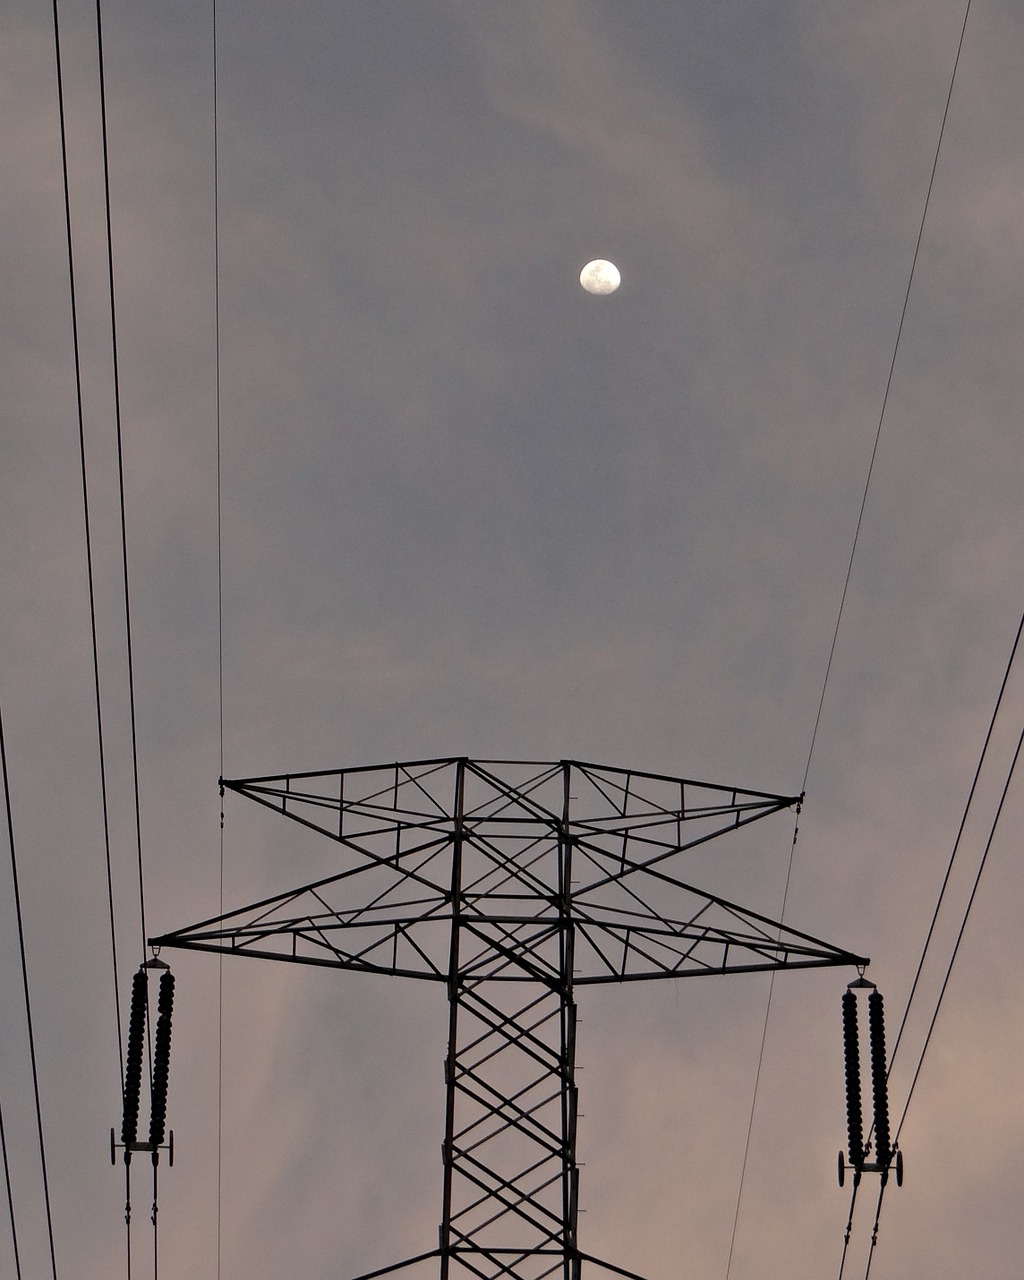 moonrise moon electric pylon free photo